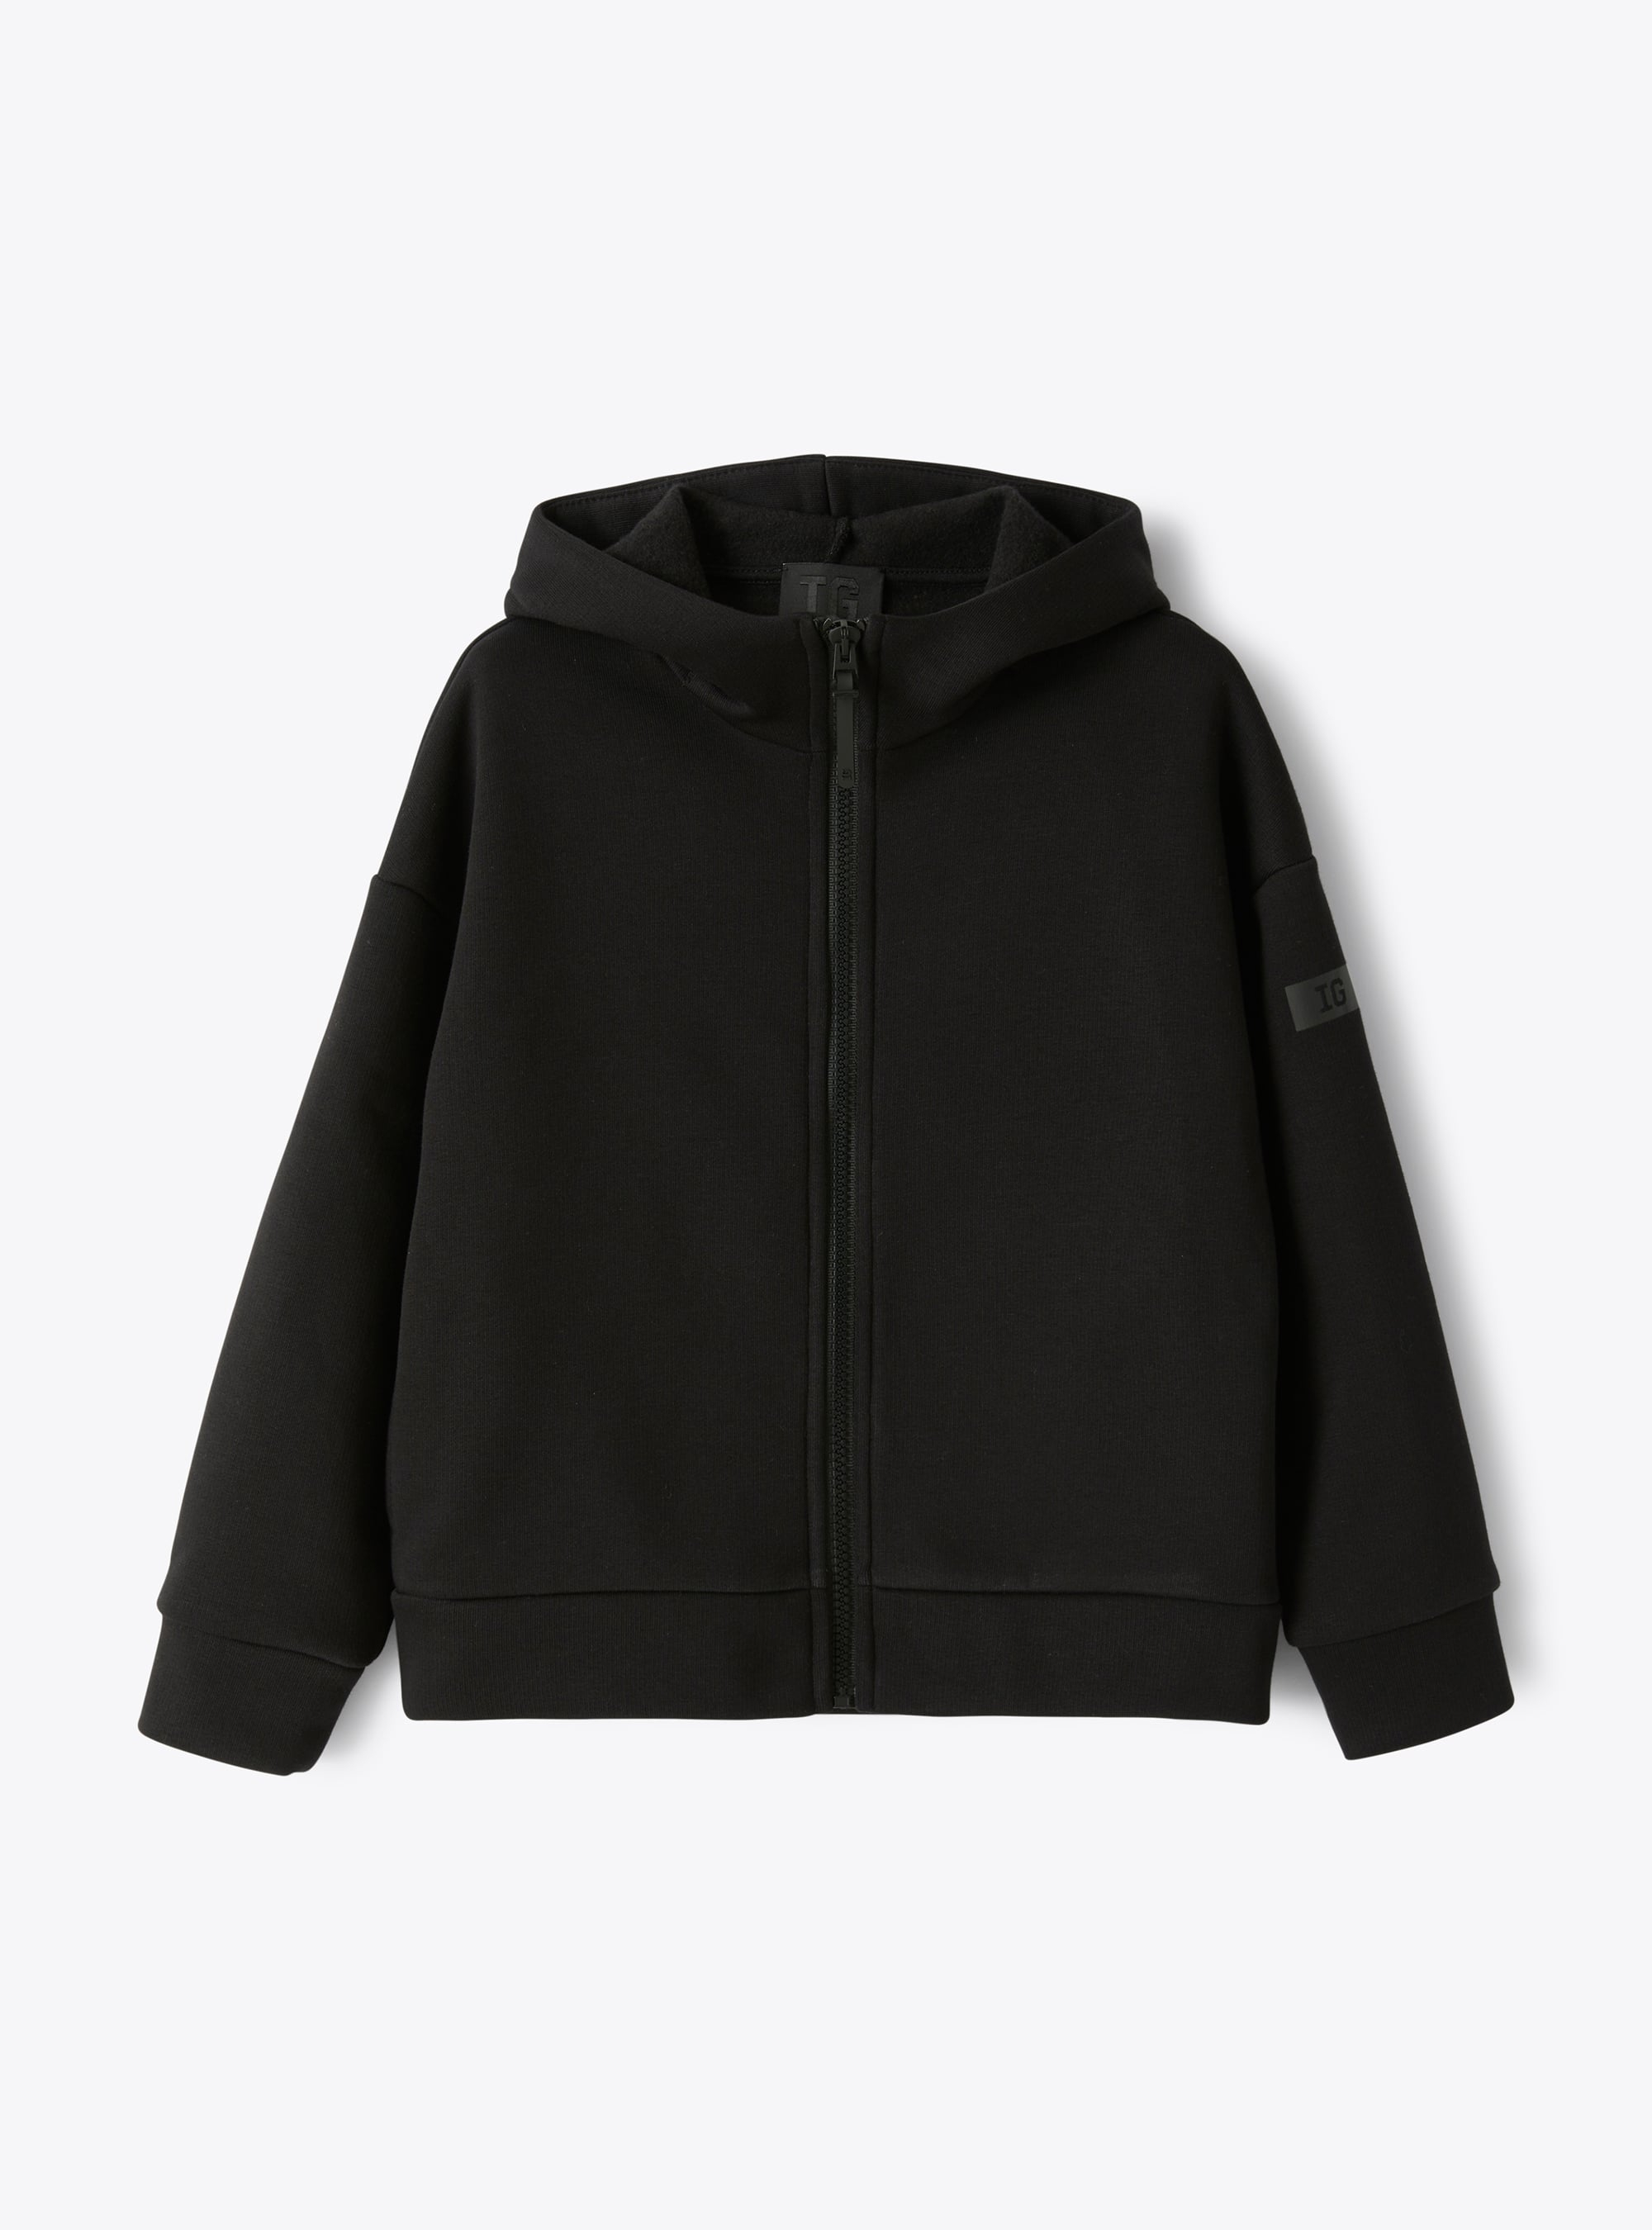 Sweat jacket in a black hi-tech fabric - Sweatshirts - Il Gufo